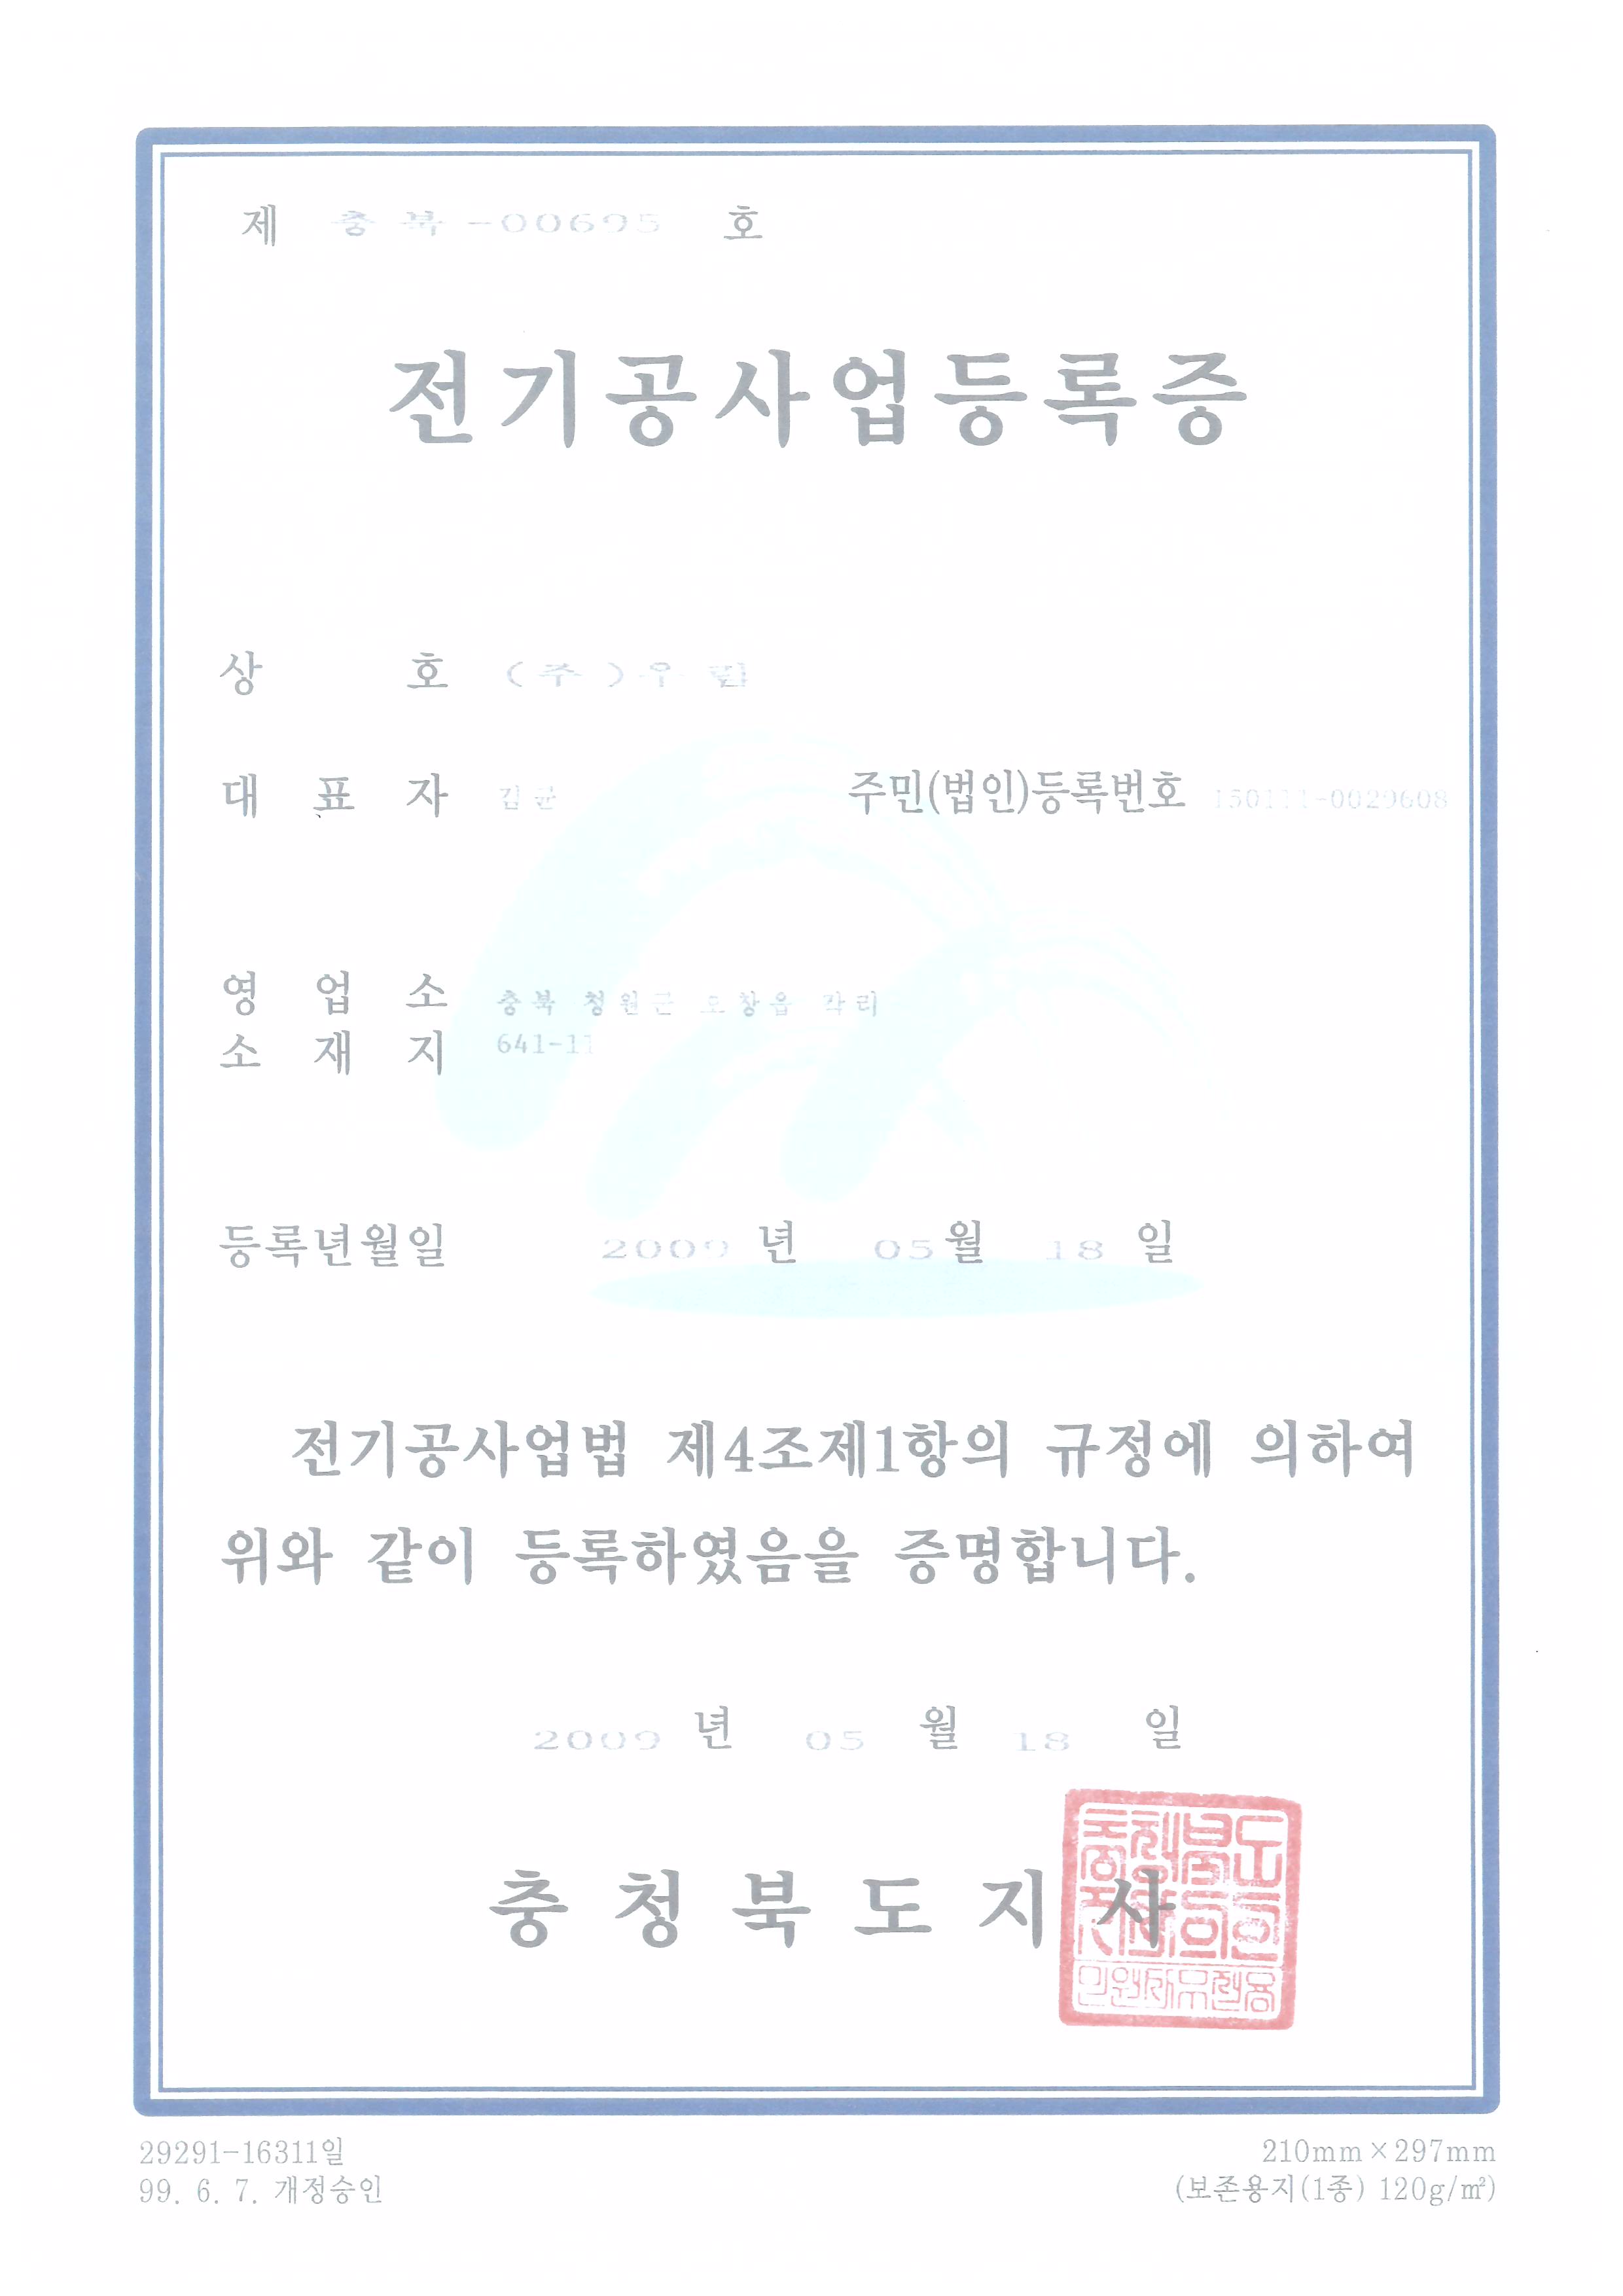 Electric work registration certificate [첨부 이미지1]